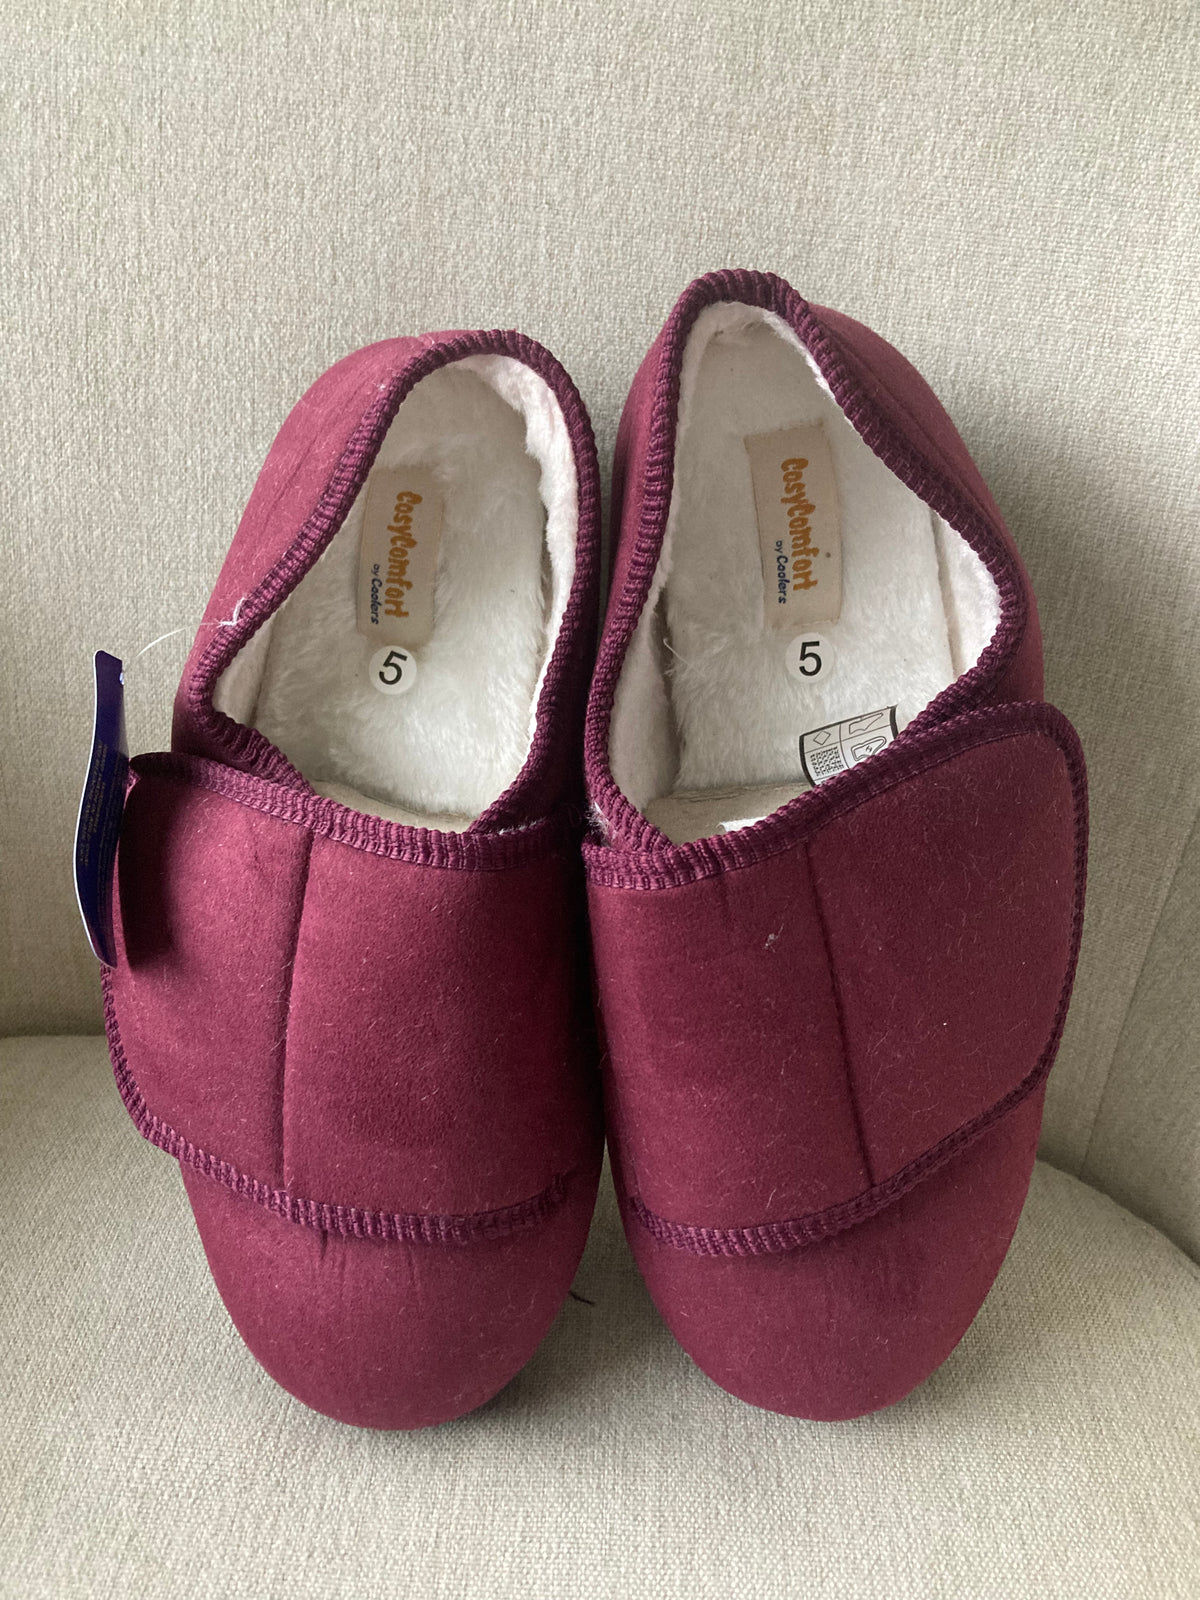 Burgundy coolers orthopaedic slippers